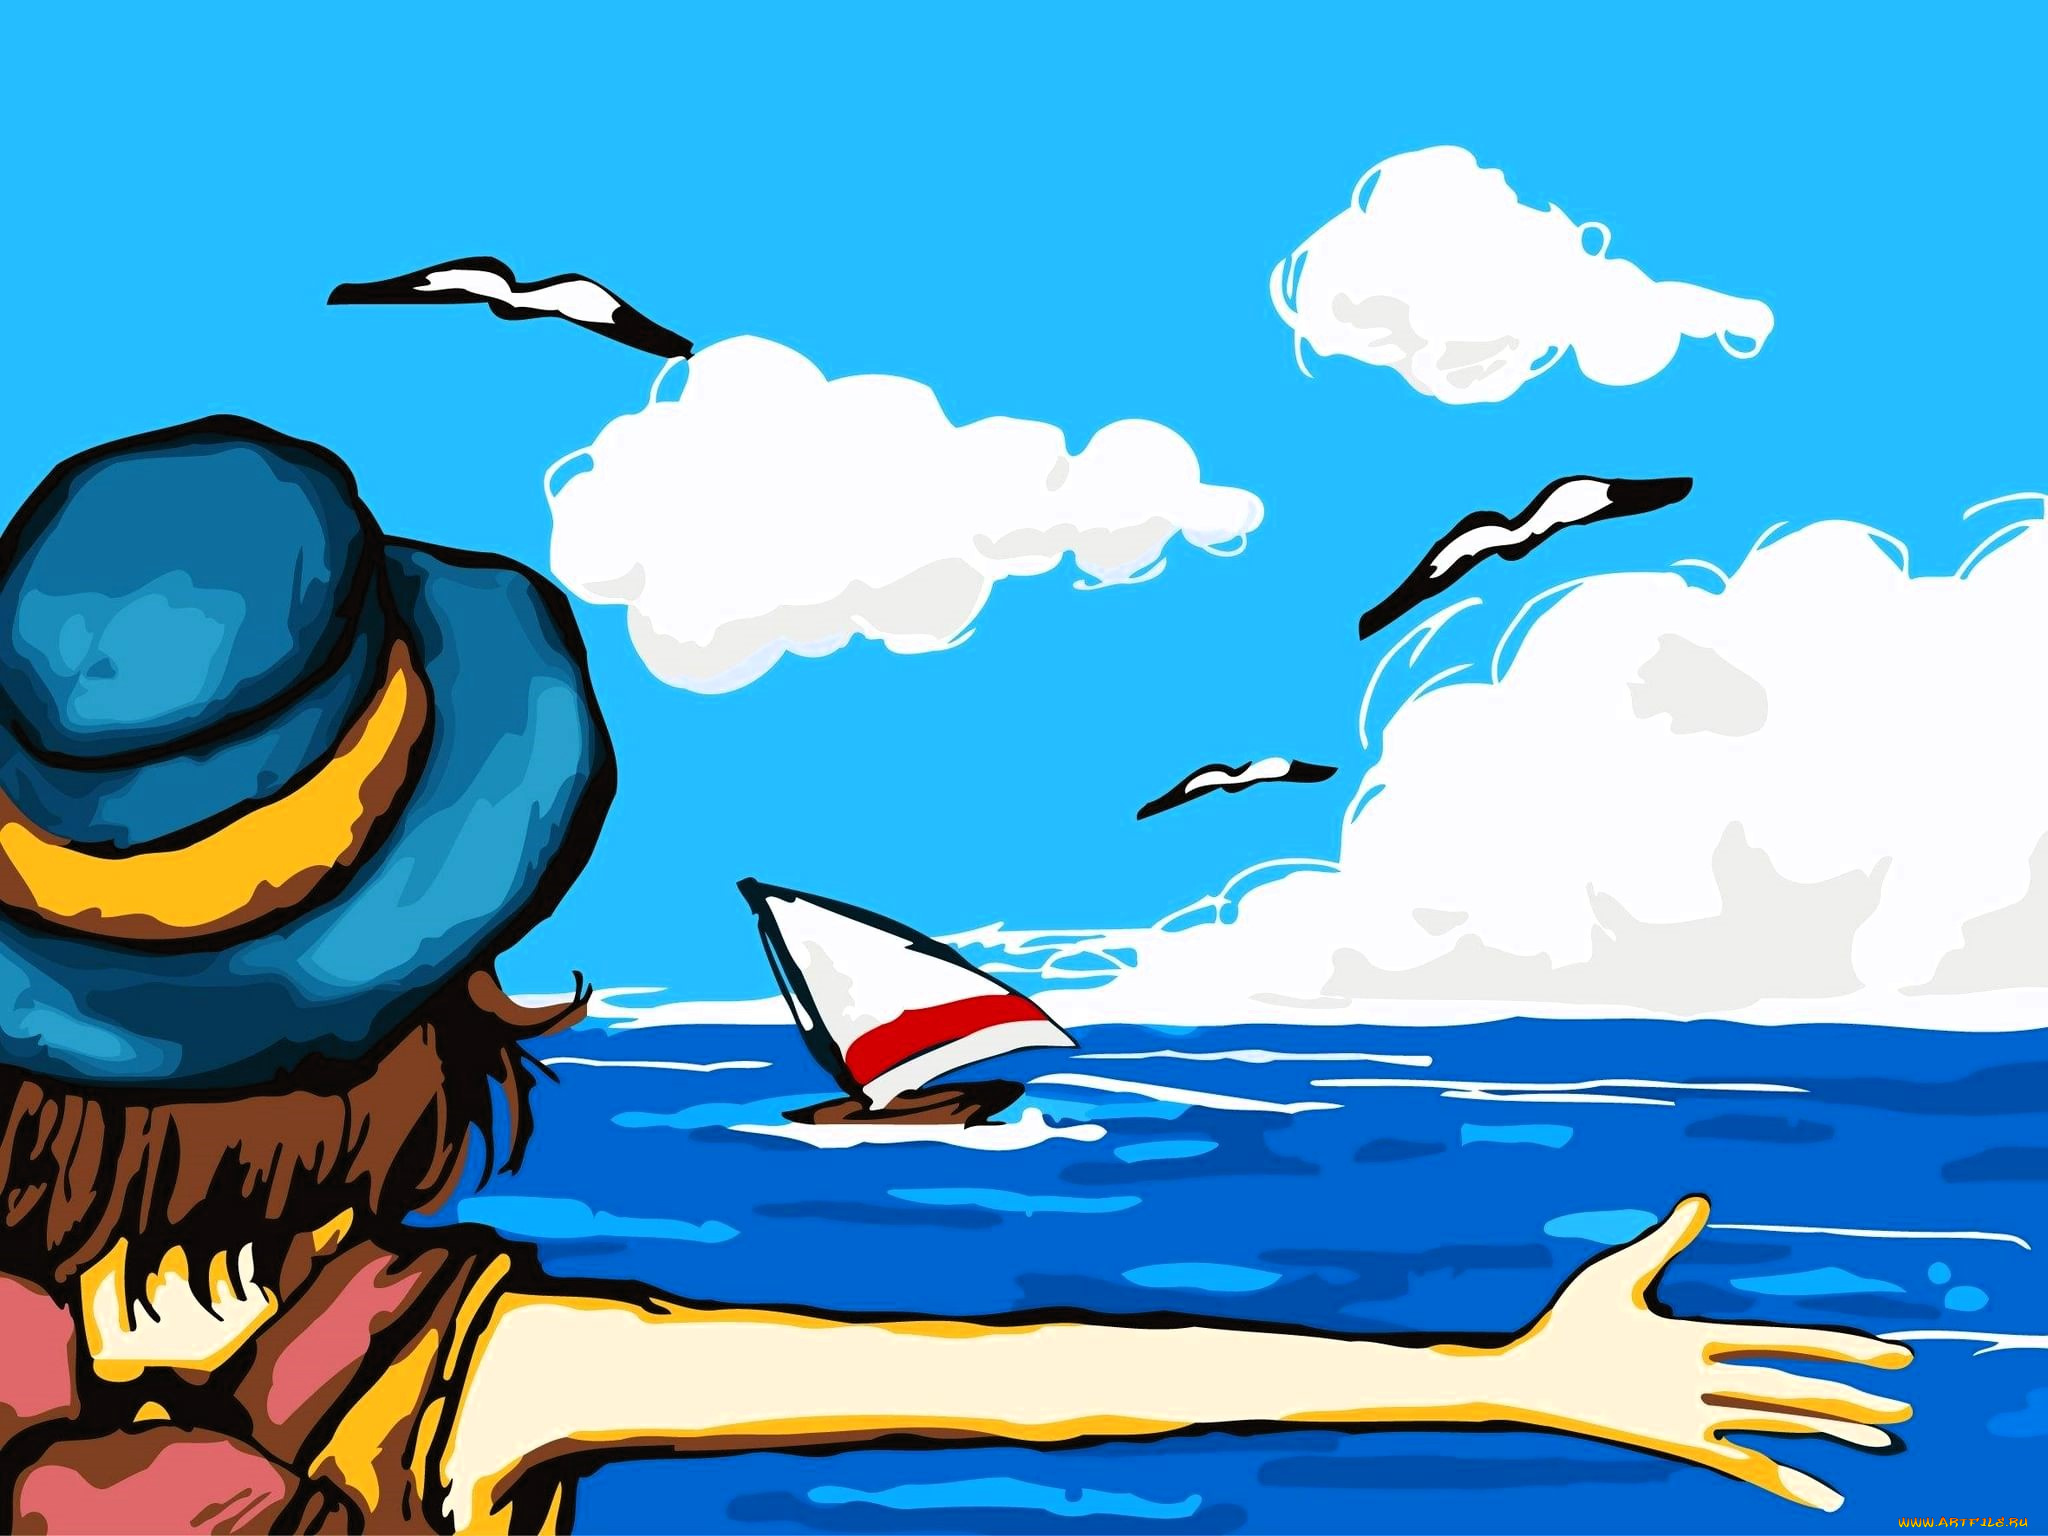 рисованное, дети, девочка, шляпа, море, чайки, яхта